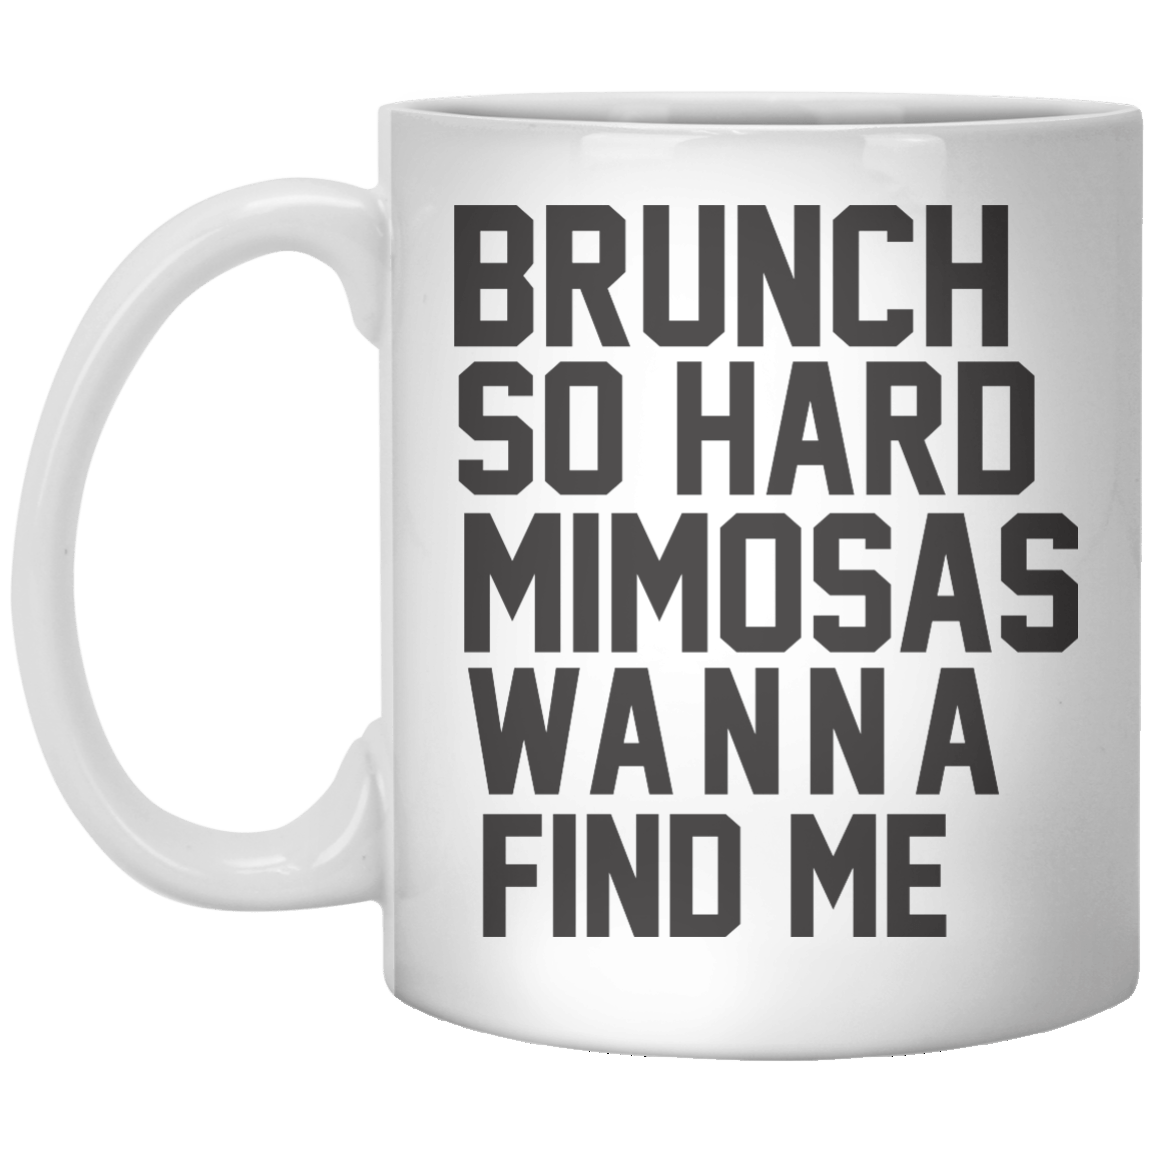 Brunch So Hard Mimosas Wanna Find Me MUG - Shirtoopia